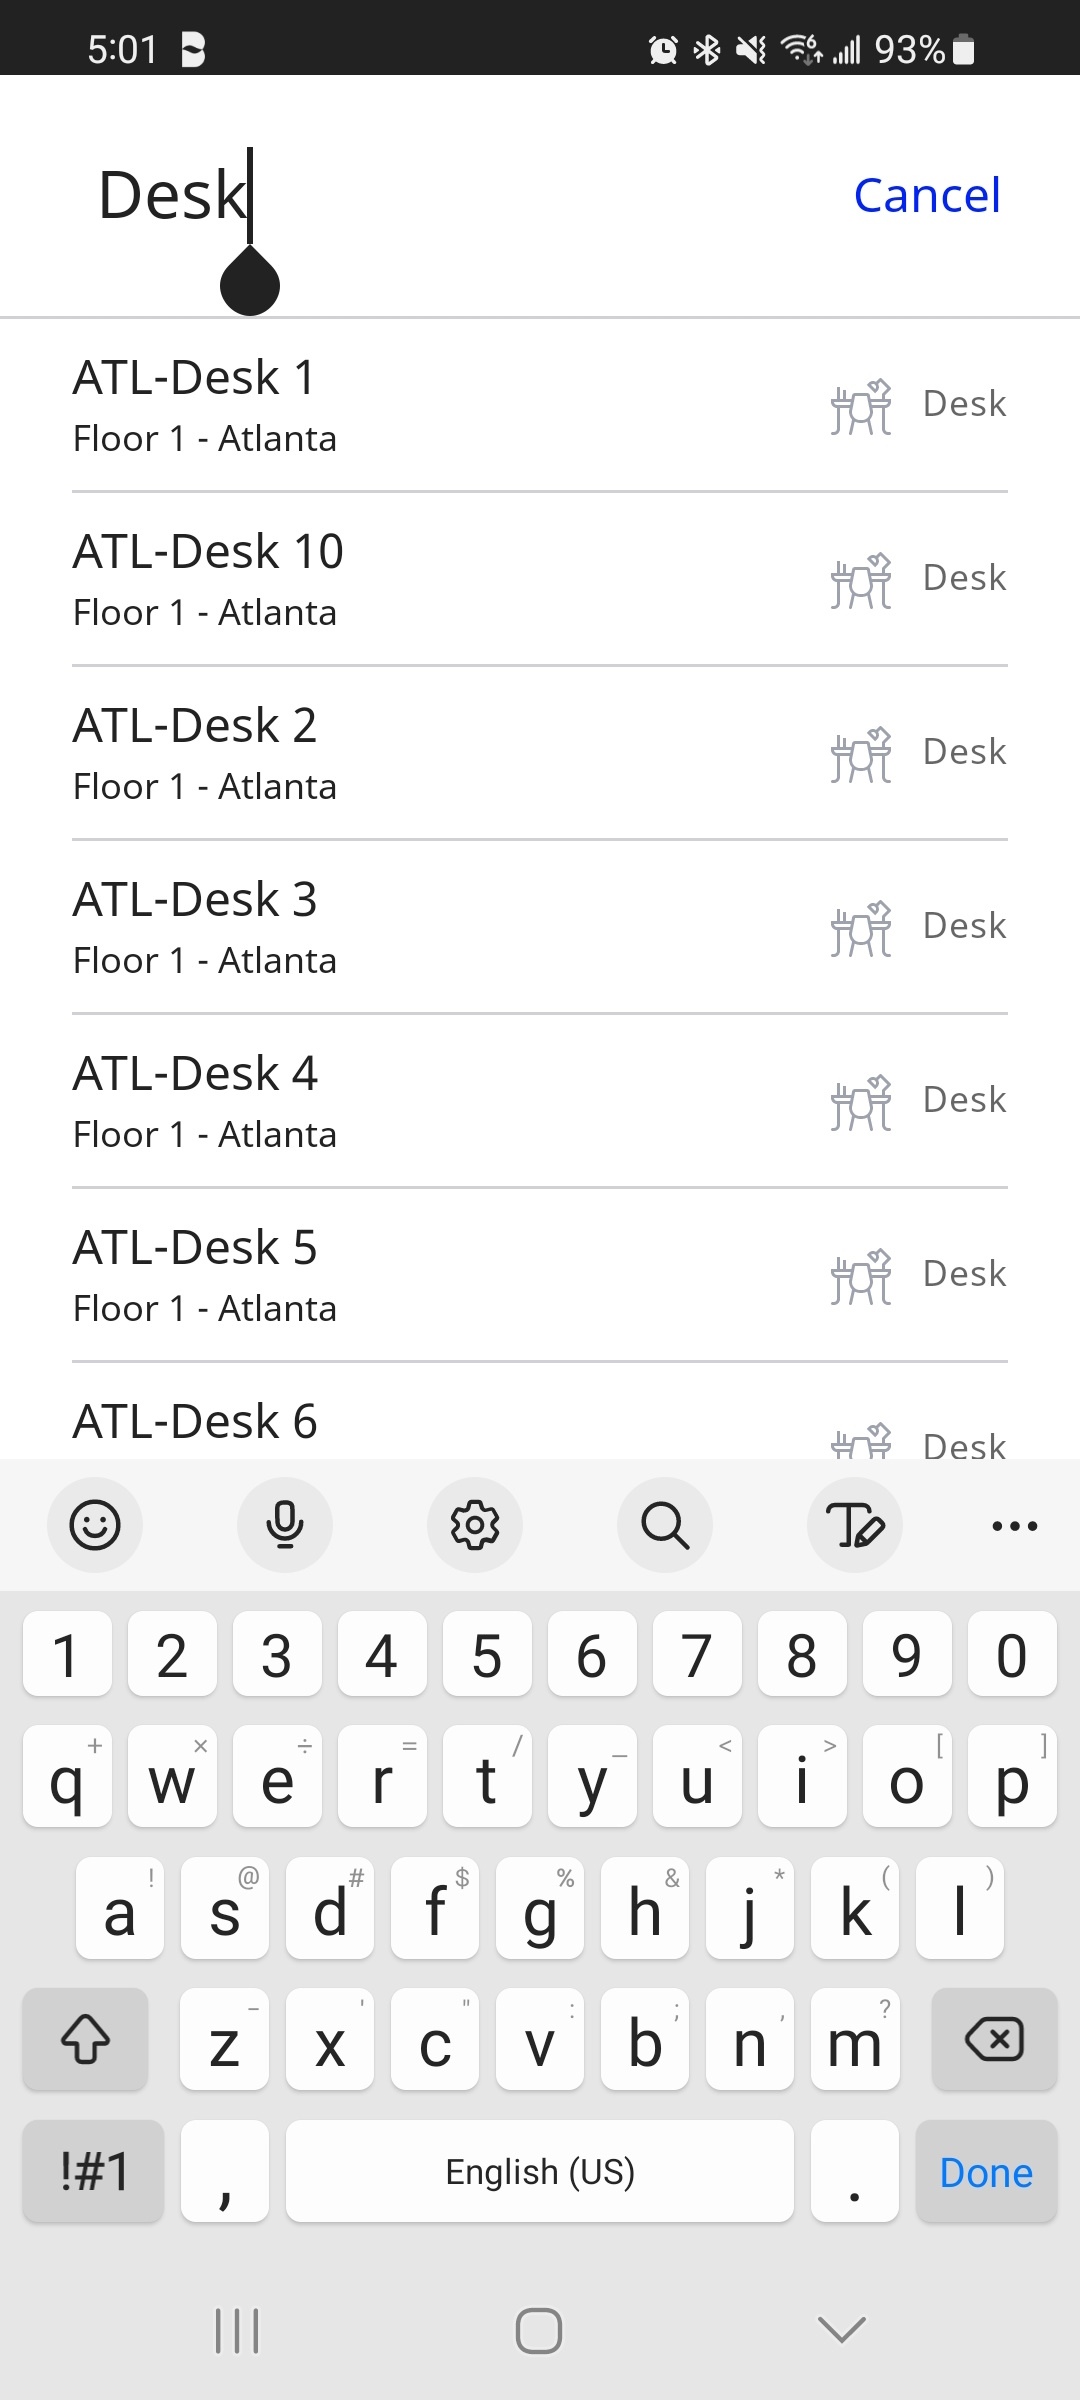 TEEM Mobile Search Desk Results.jpg